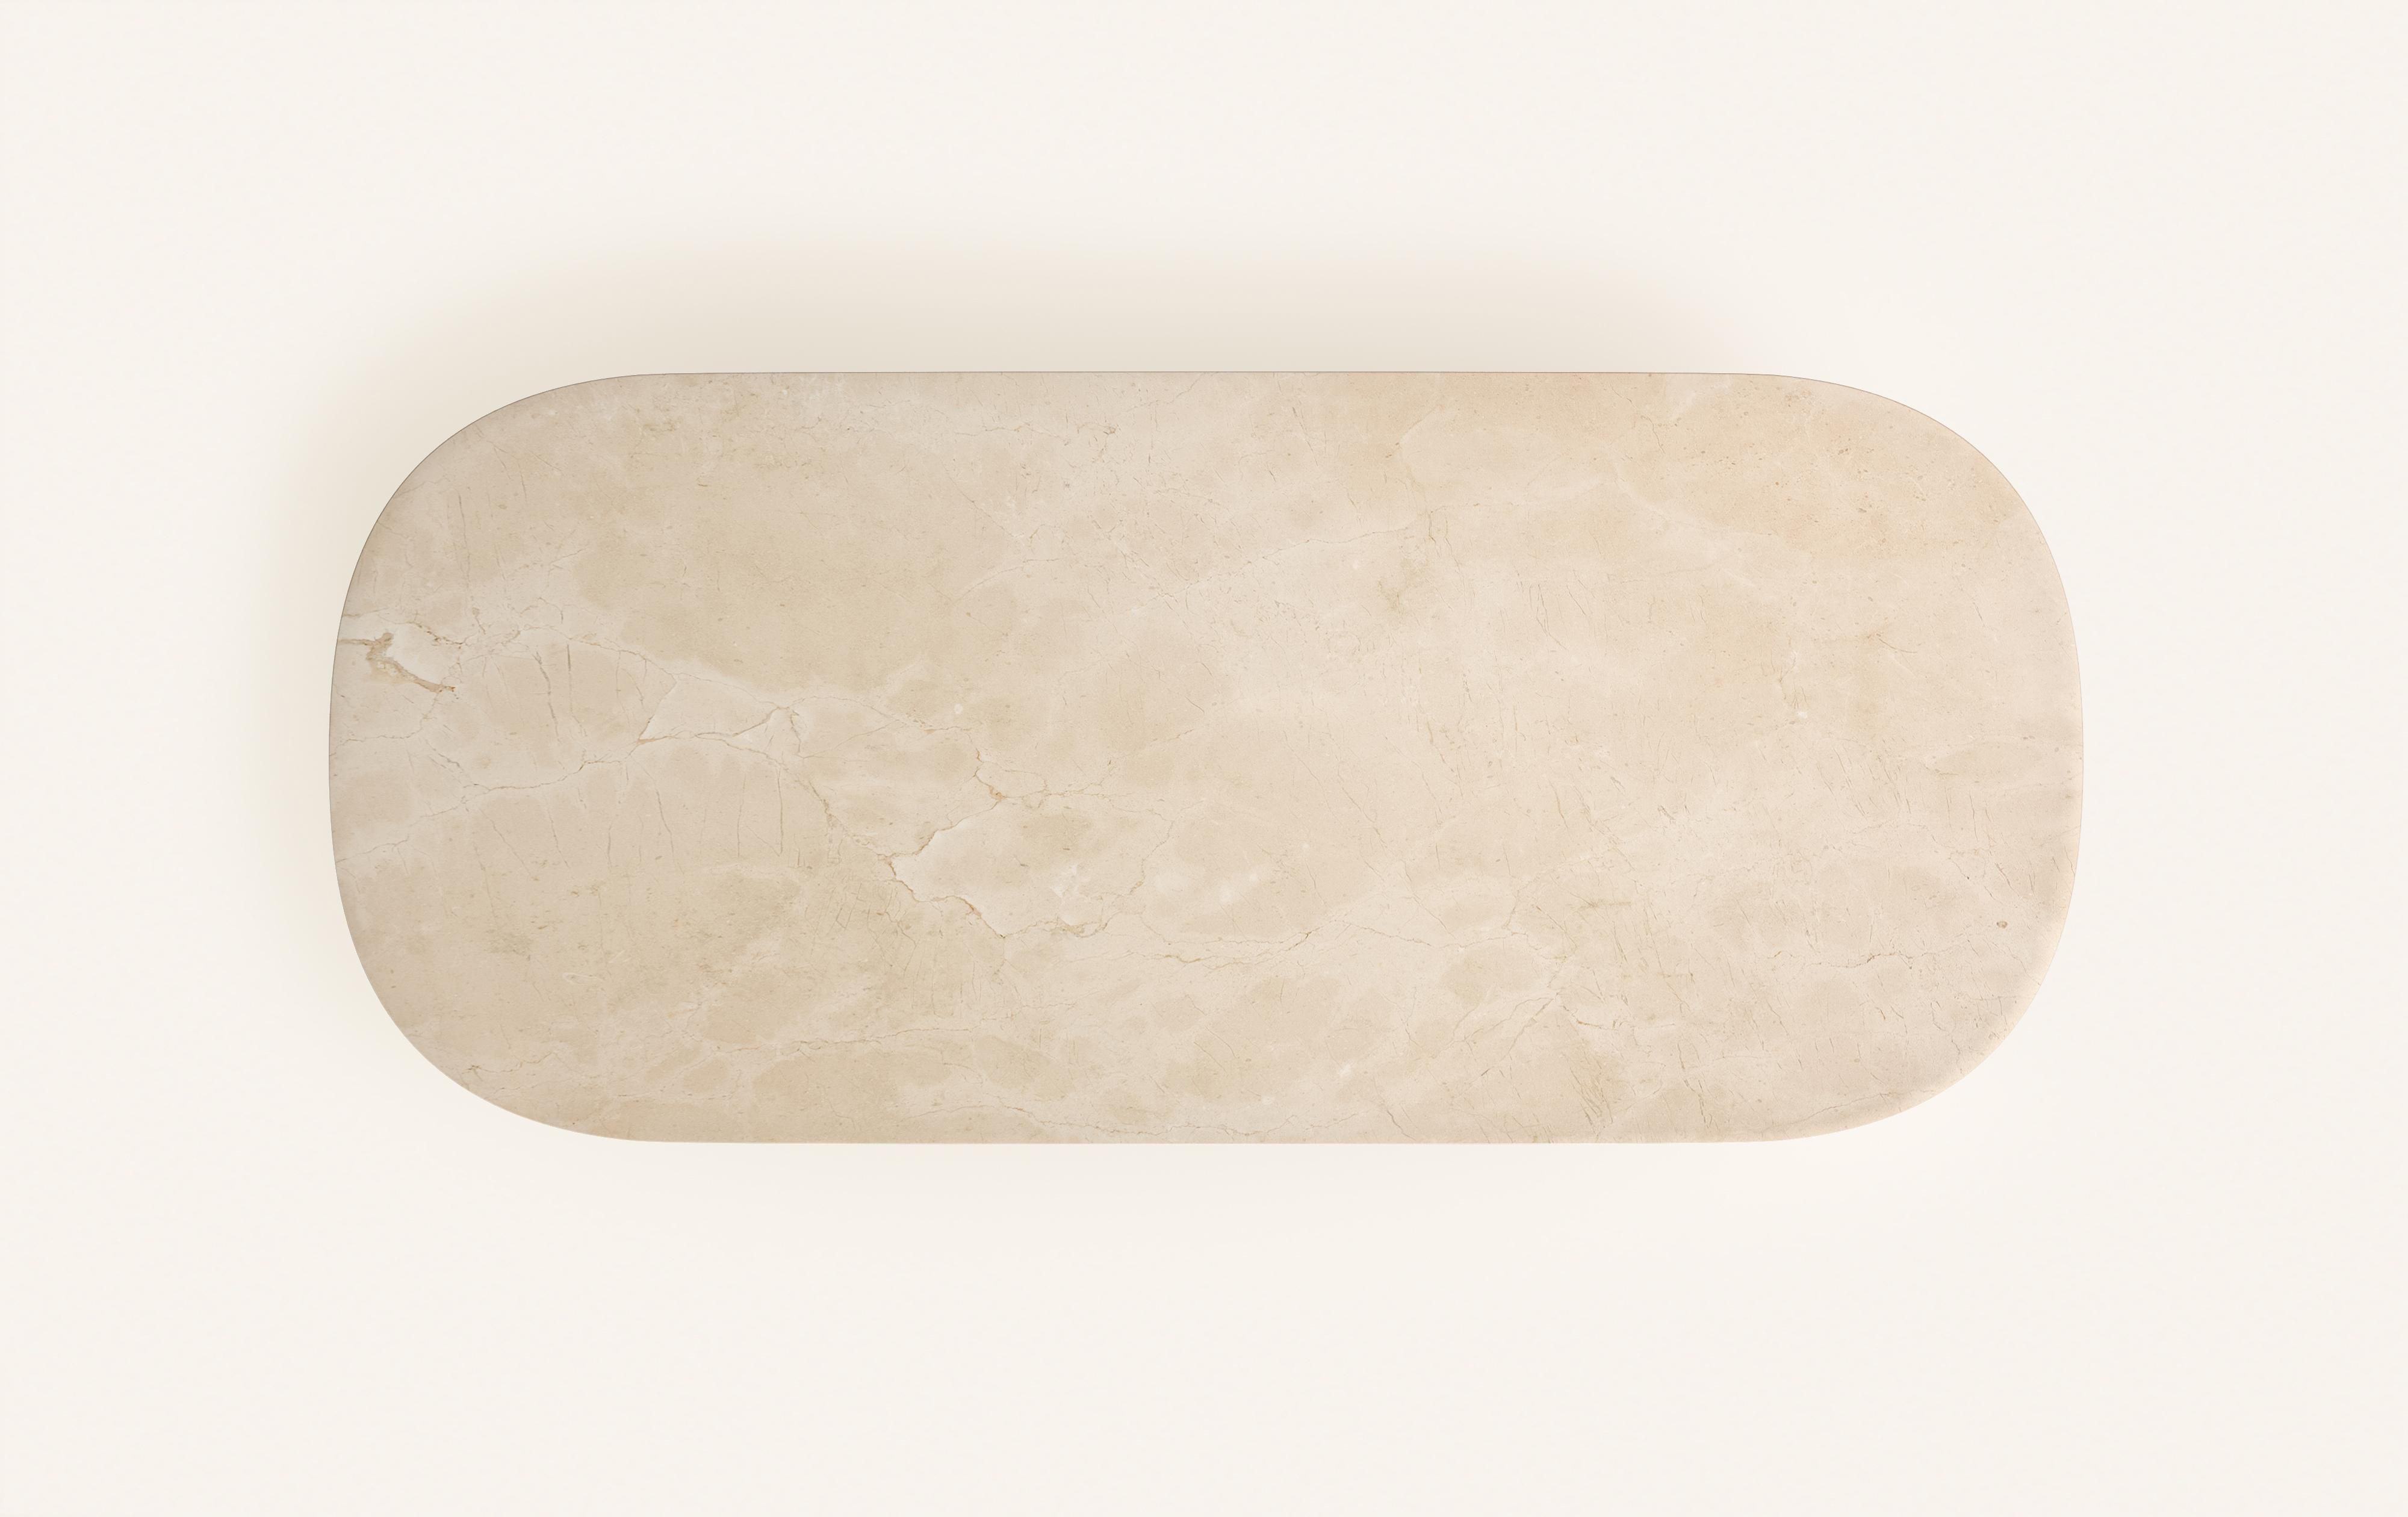 FORM(LA) Cono Oval Dining Table 96”L x 42”W x 30”H Crema Marfil Marble In New Condition For Sale In Los Angeles, CA